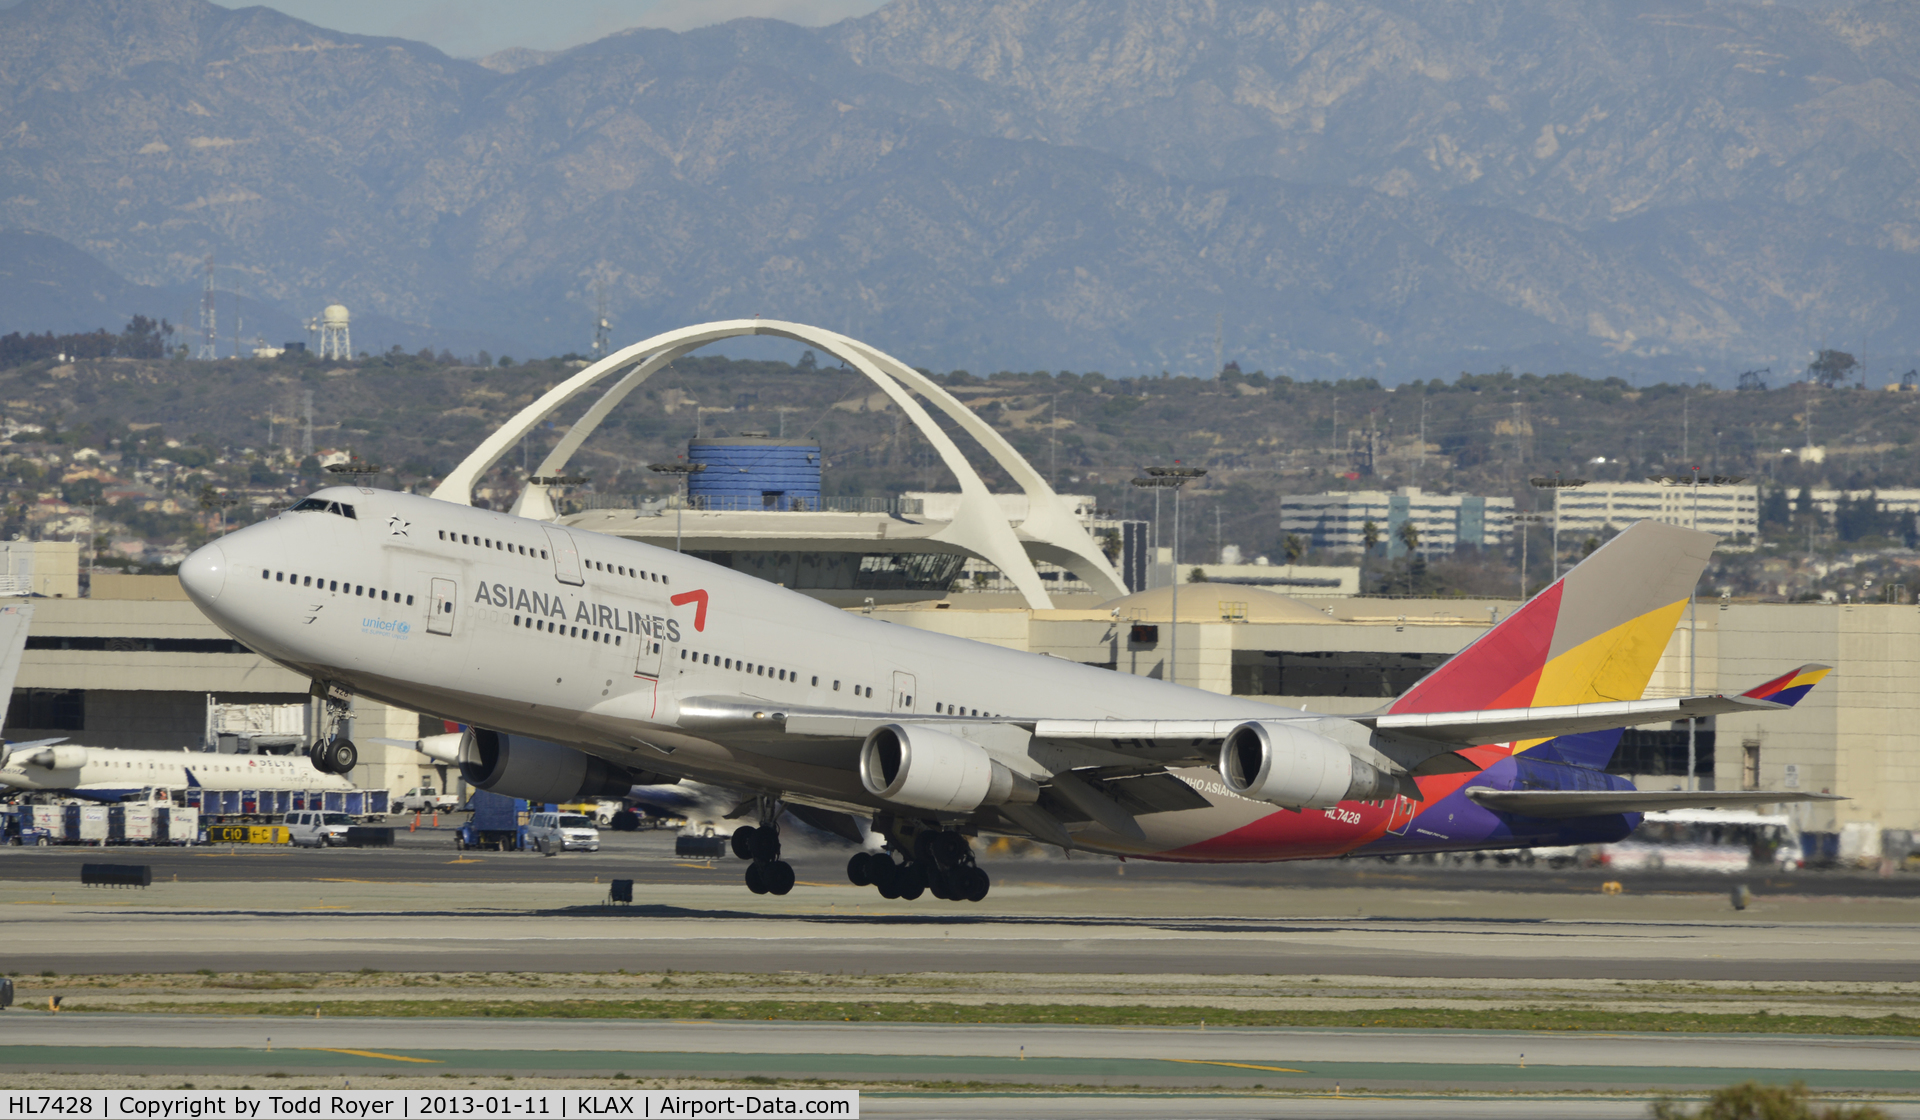 HL7428, 1998 Boeing 747-48E C/N 28552, Departing LAX